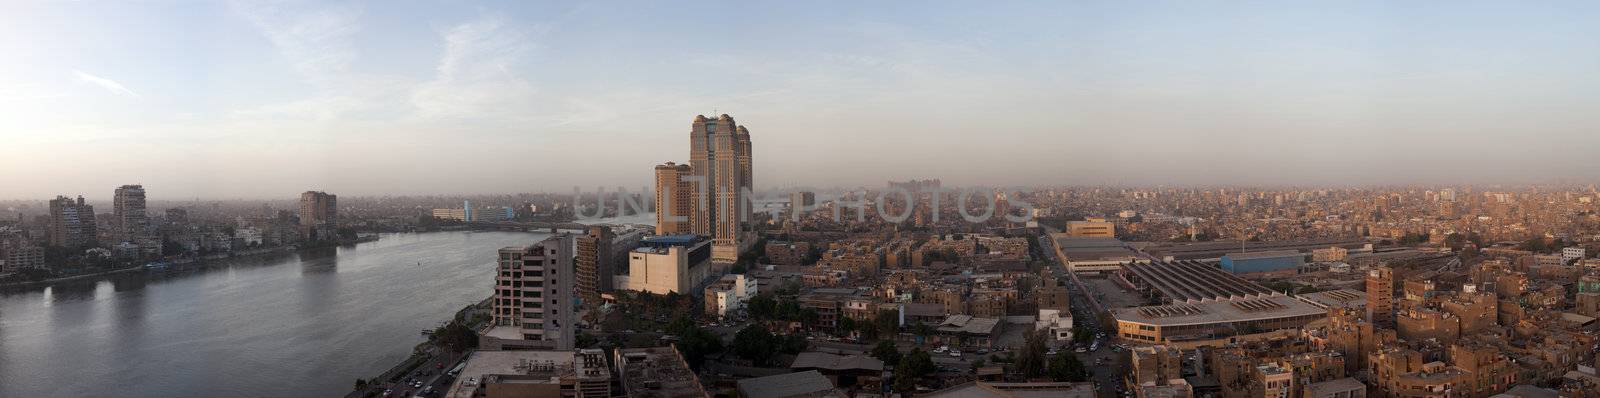 Panorama across Cairo skyline by steheap